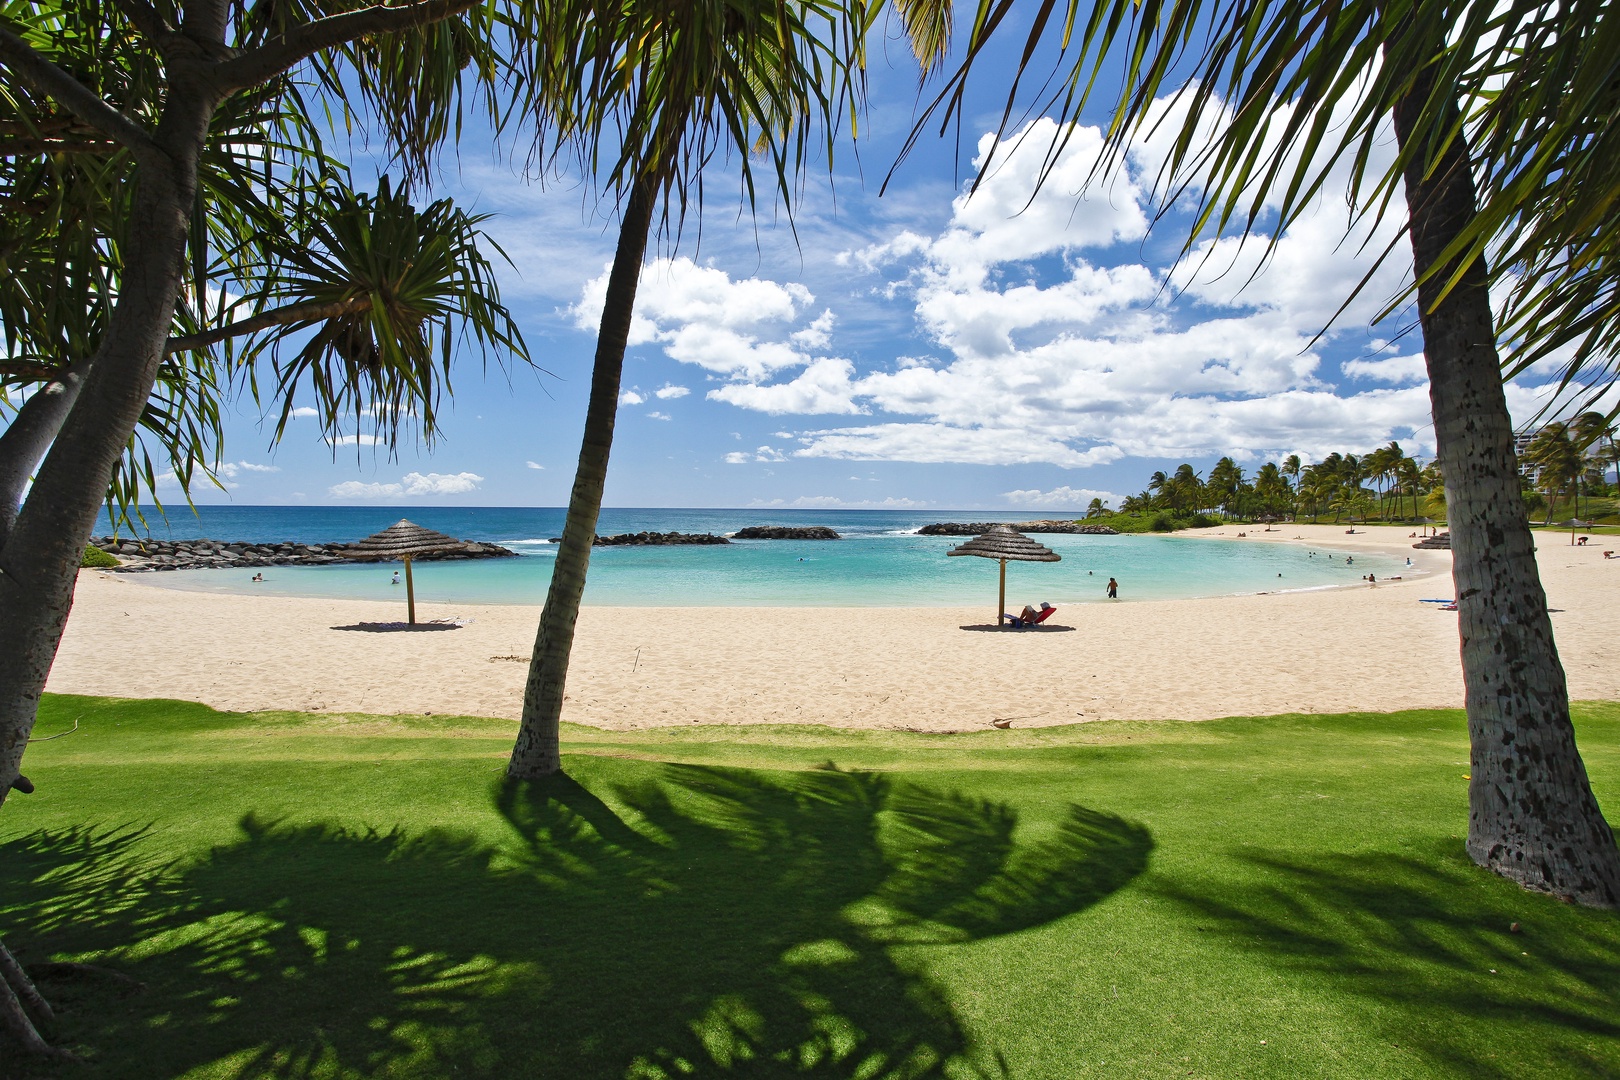 Kapolei Vacation Rentals, Fairways at Ko Olina 8G - The scenic lagoon with sandy beaches and captivating skies.